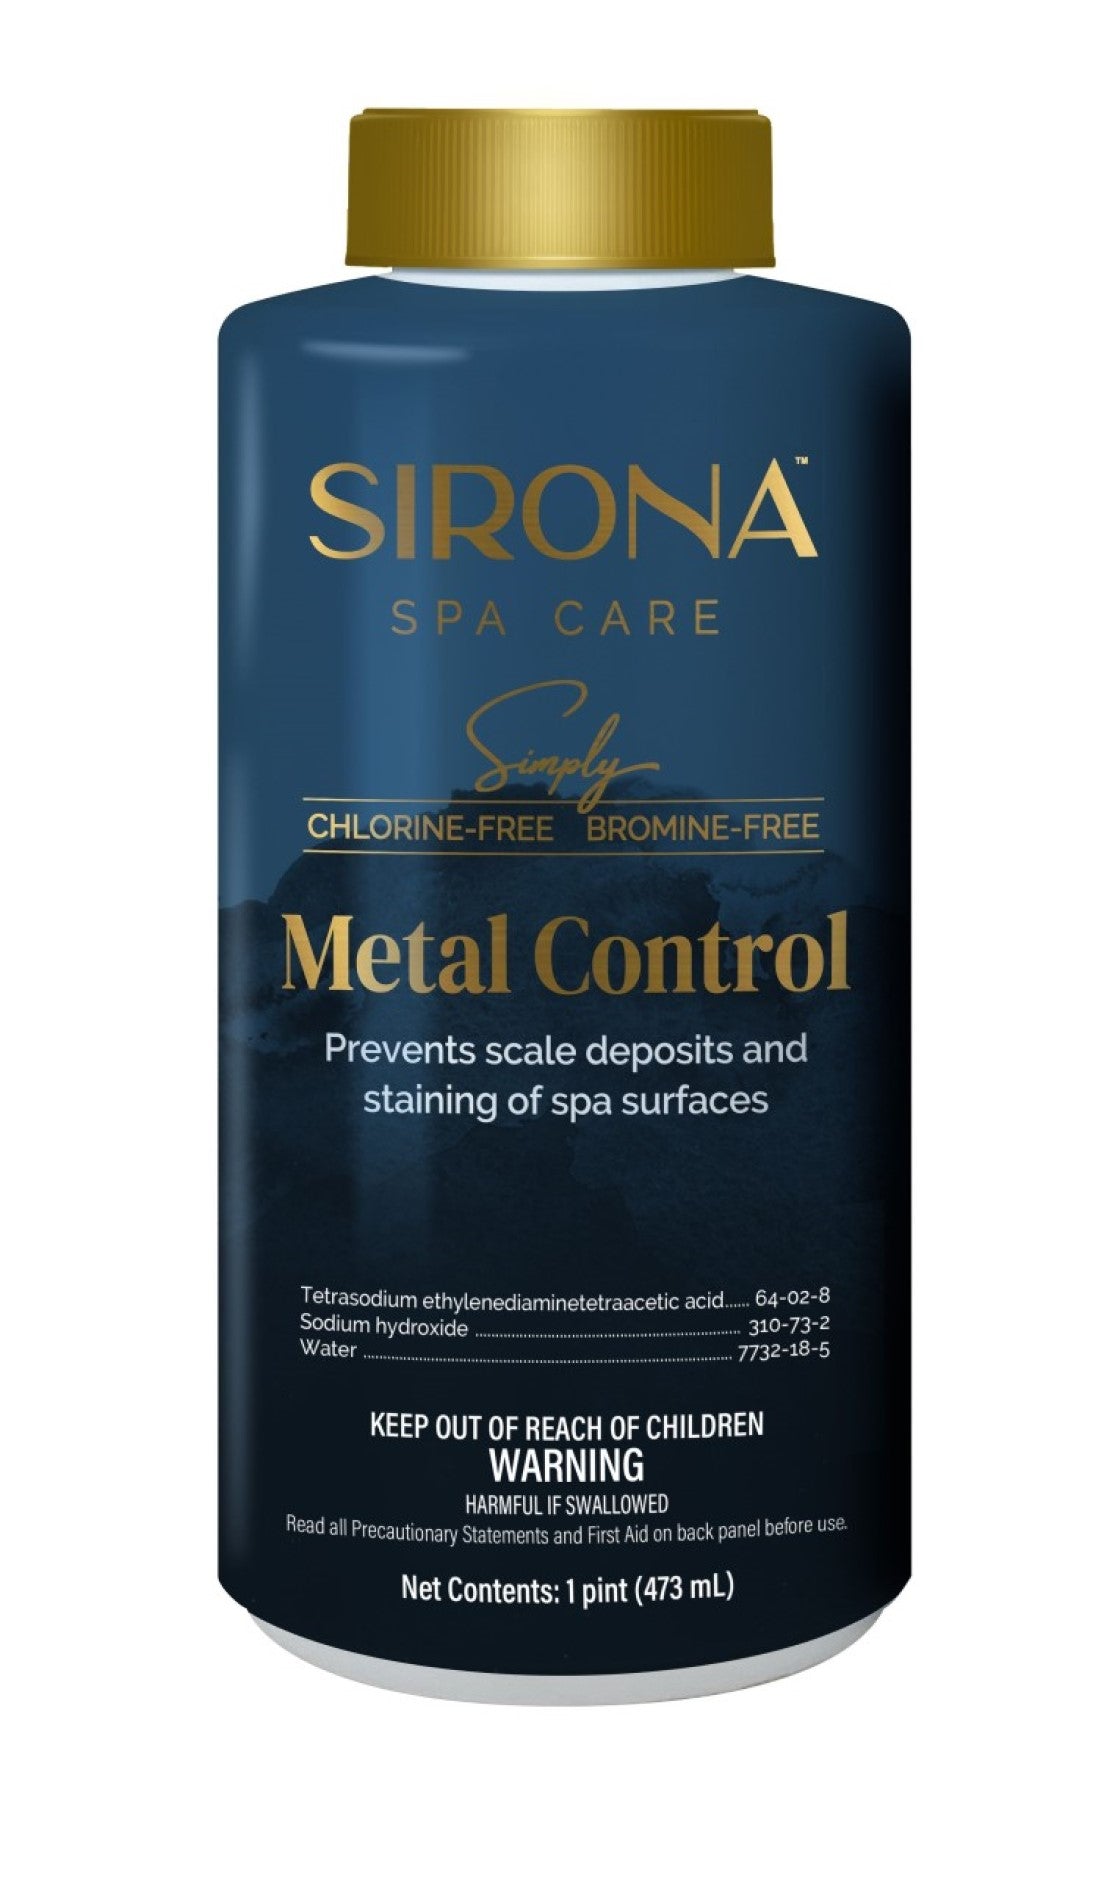 Sirona Simply Metal Control - Replaces Baqua Spa